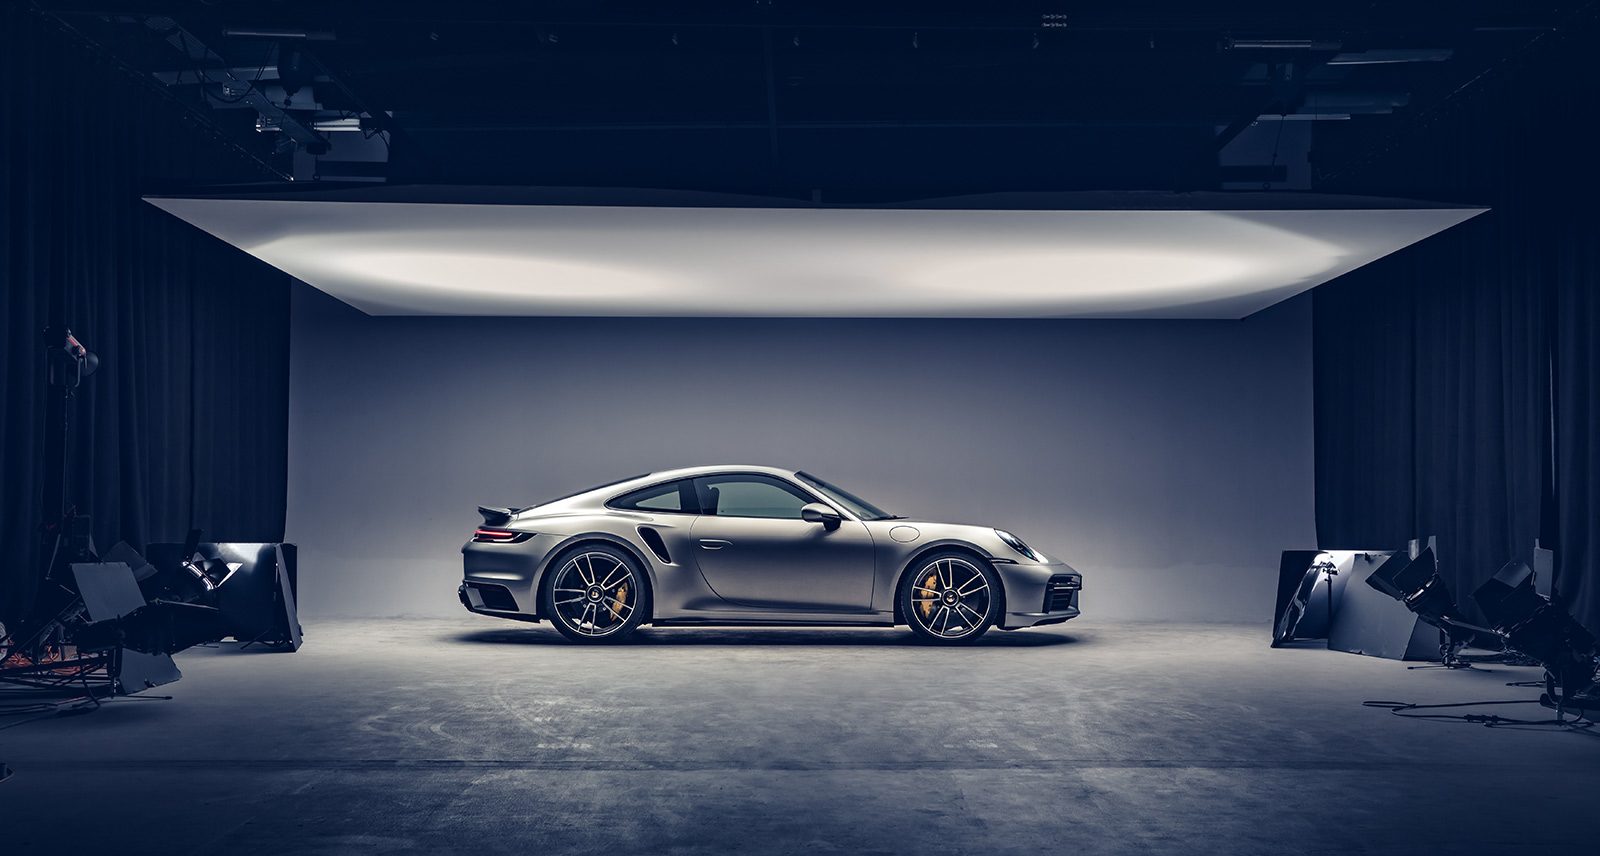 Sharp Builds: How We'd Spec Out the New Porsche 911 Turbo